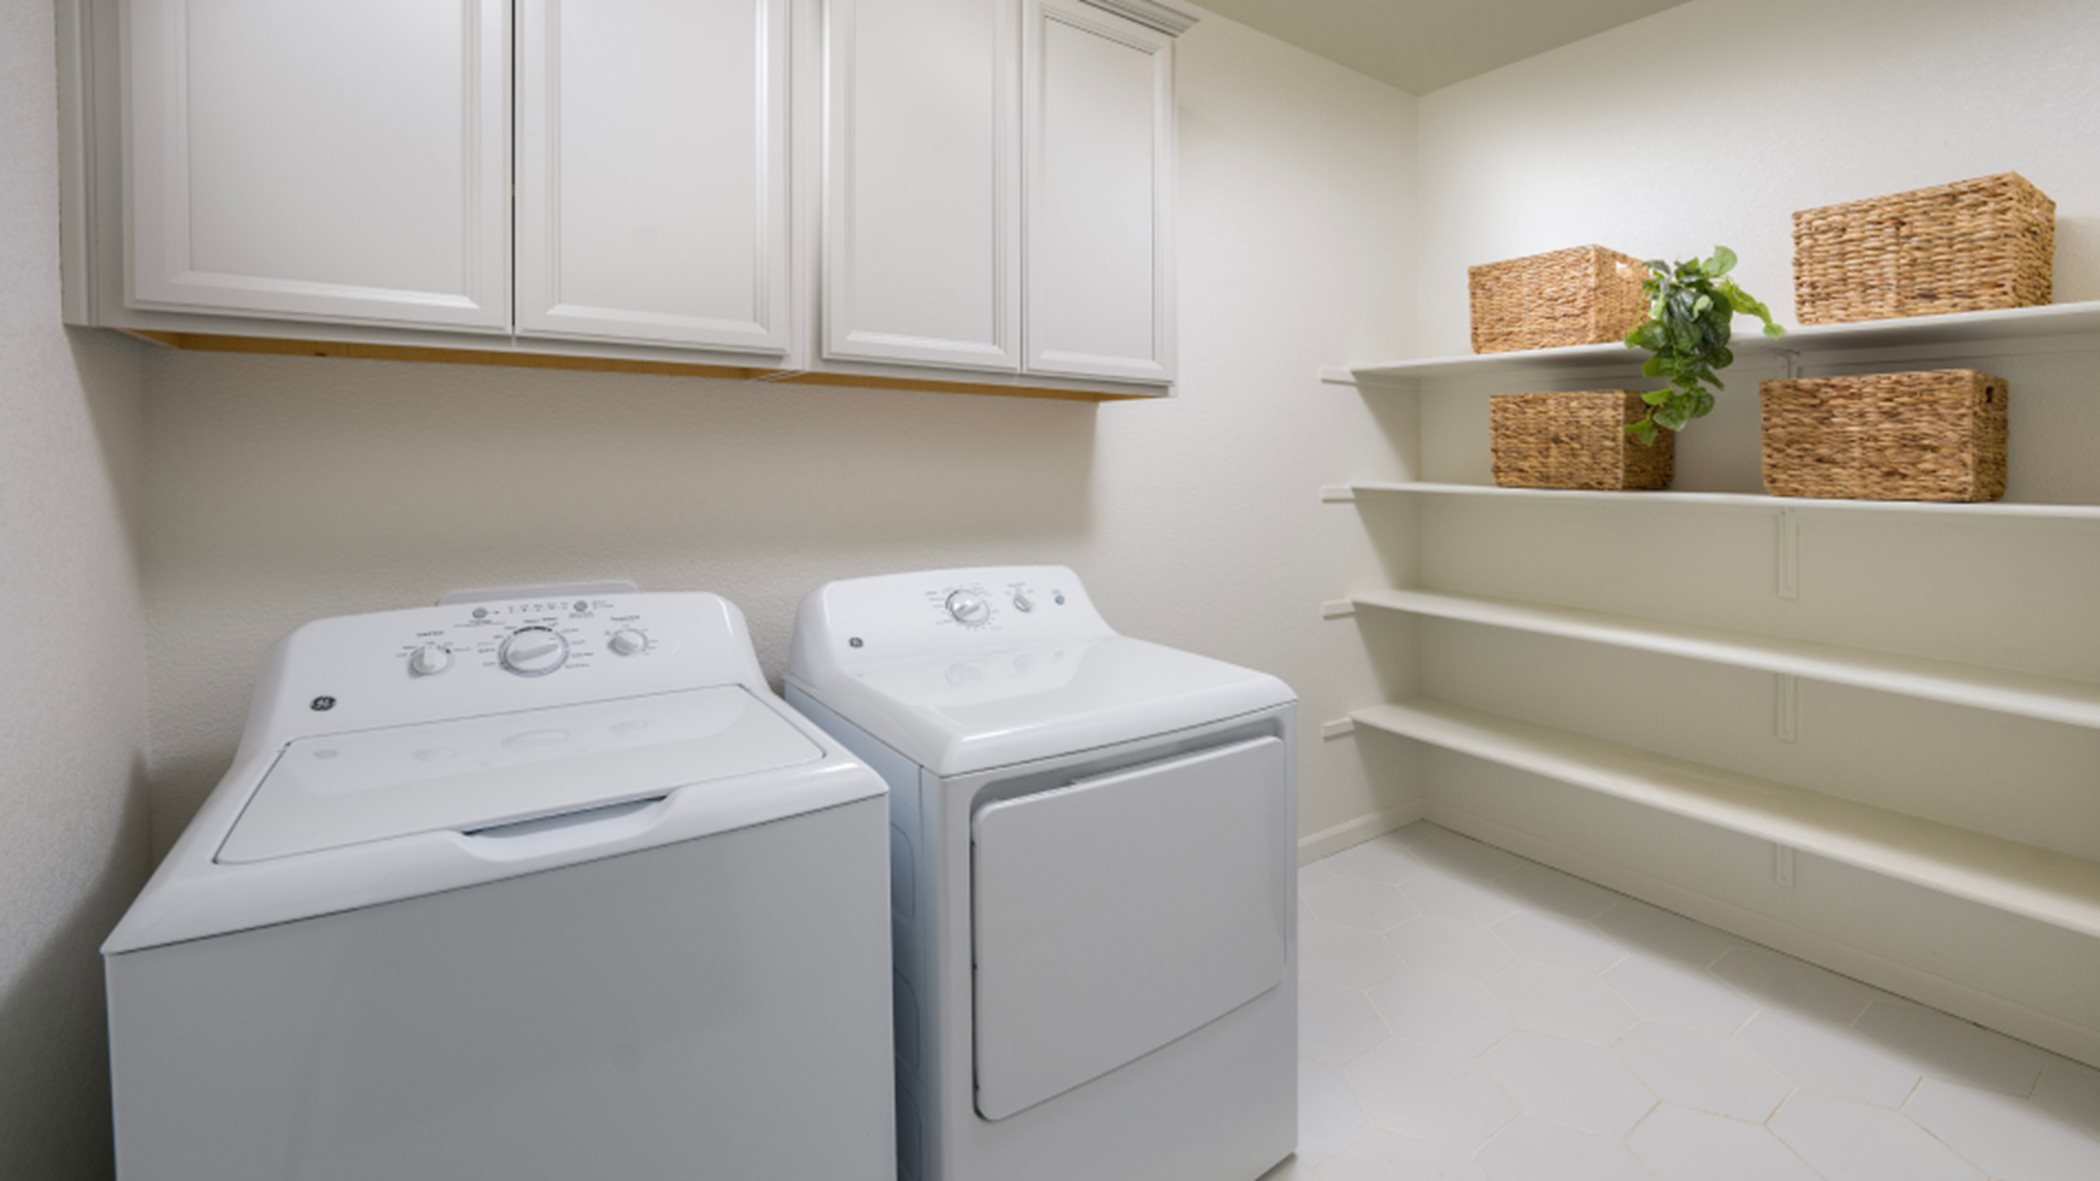 Residence 2184 Laundry Room